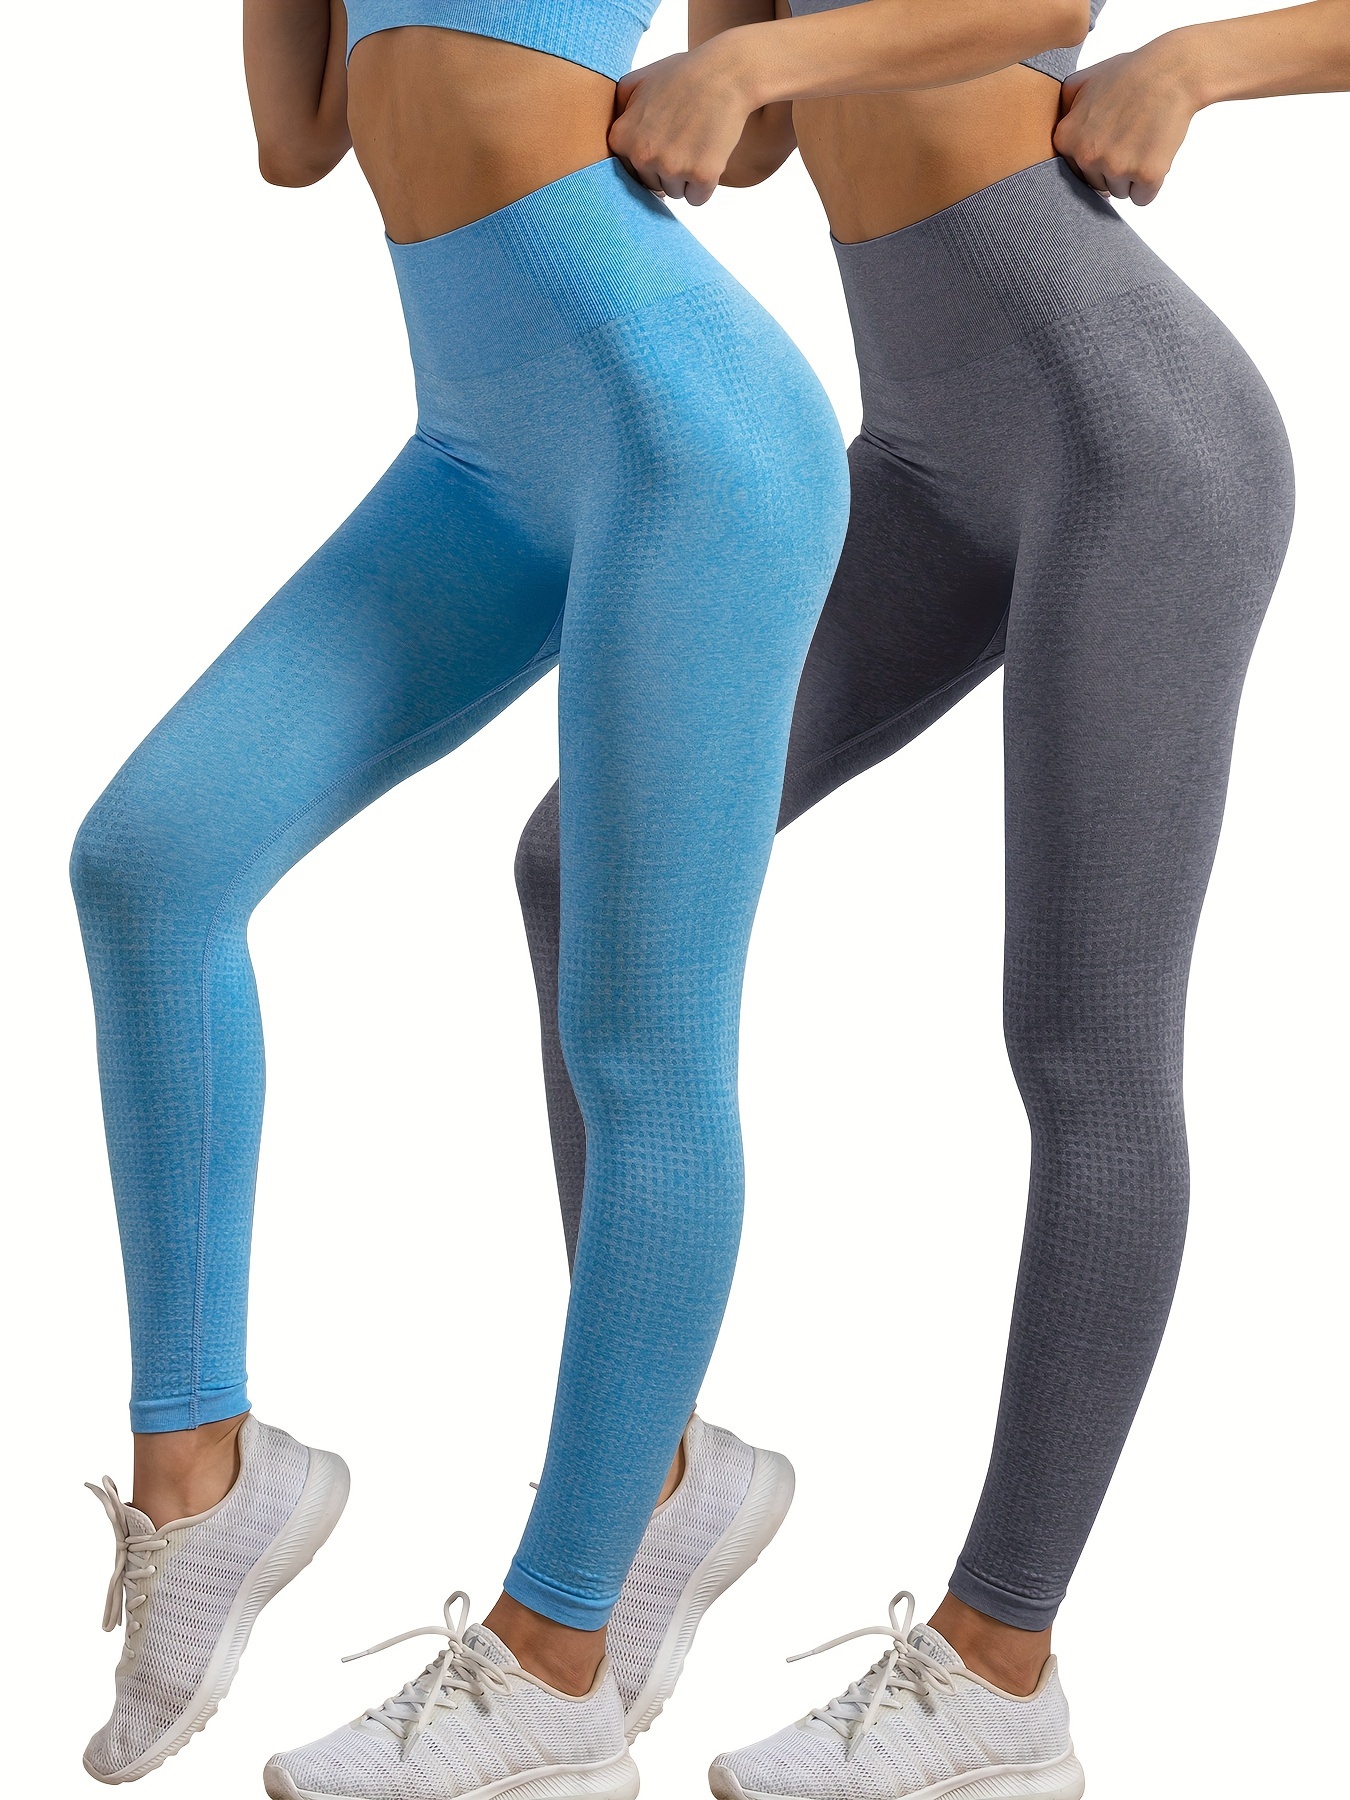 See Through Leggings Sport - Yoga Pants - AliExpress